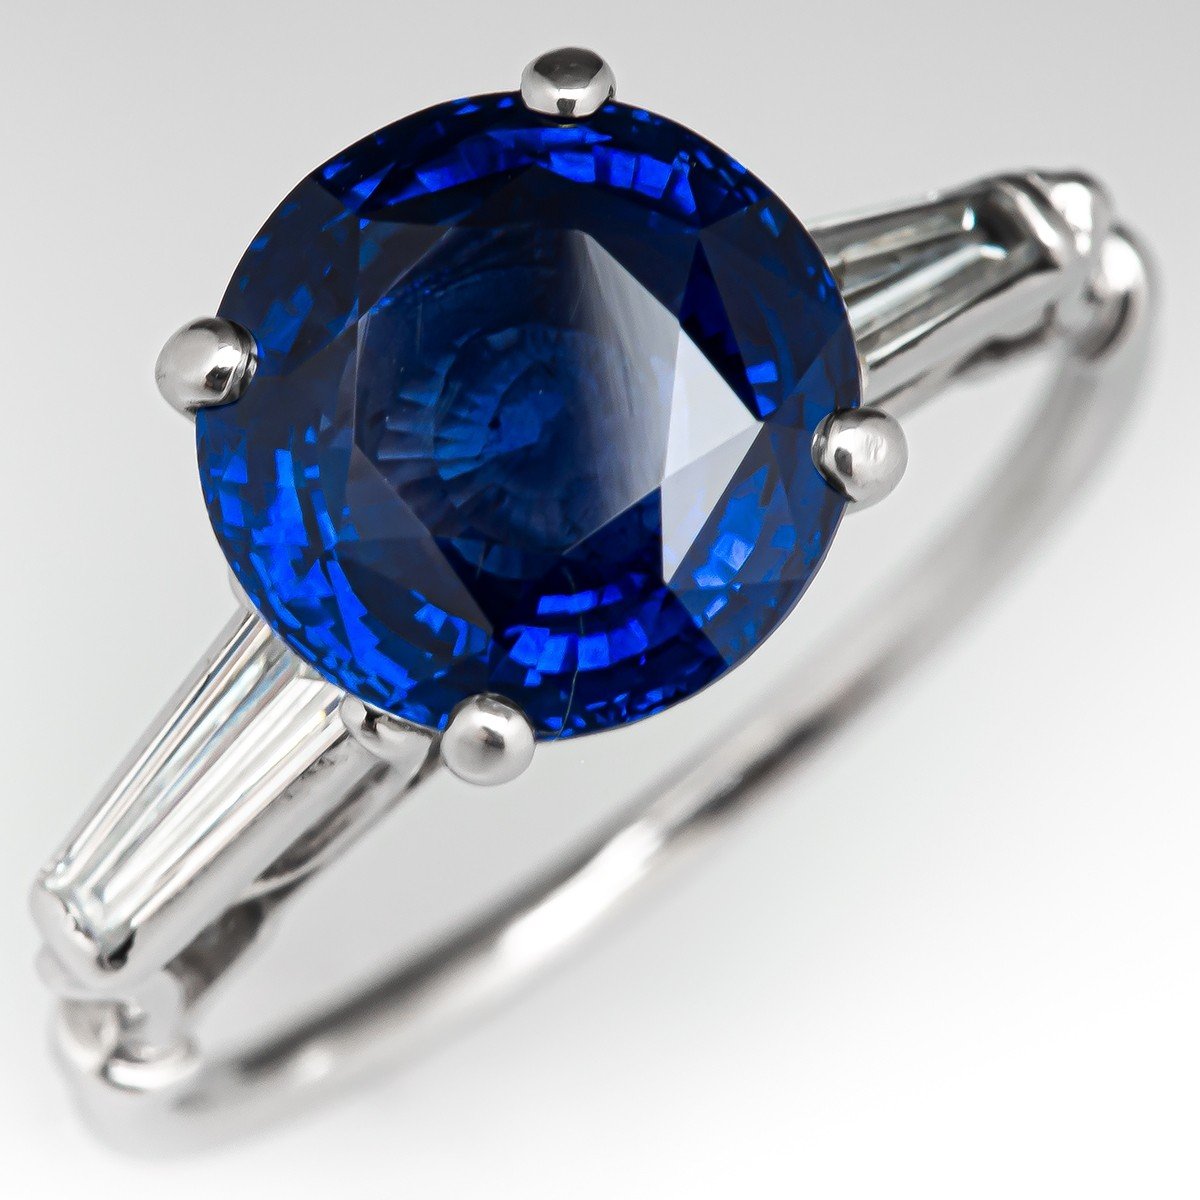 Stunning 4 Carat Sapphire & Baguette Cut Diamond Ring Platinum GIA